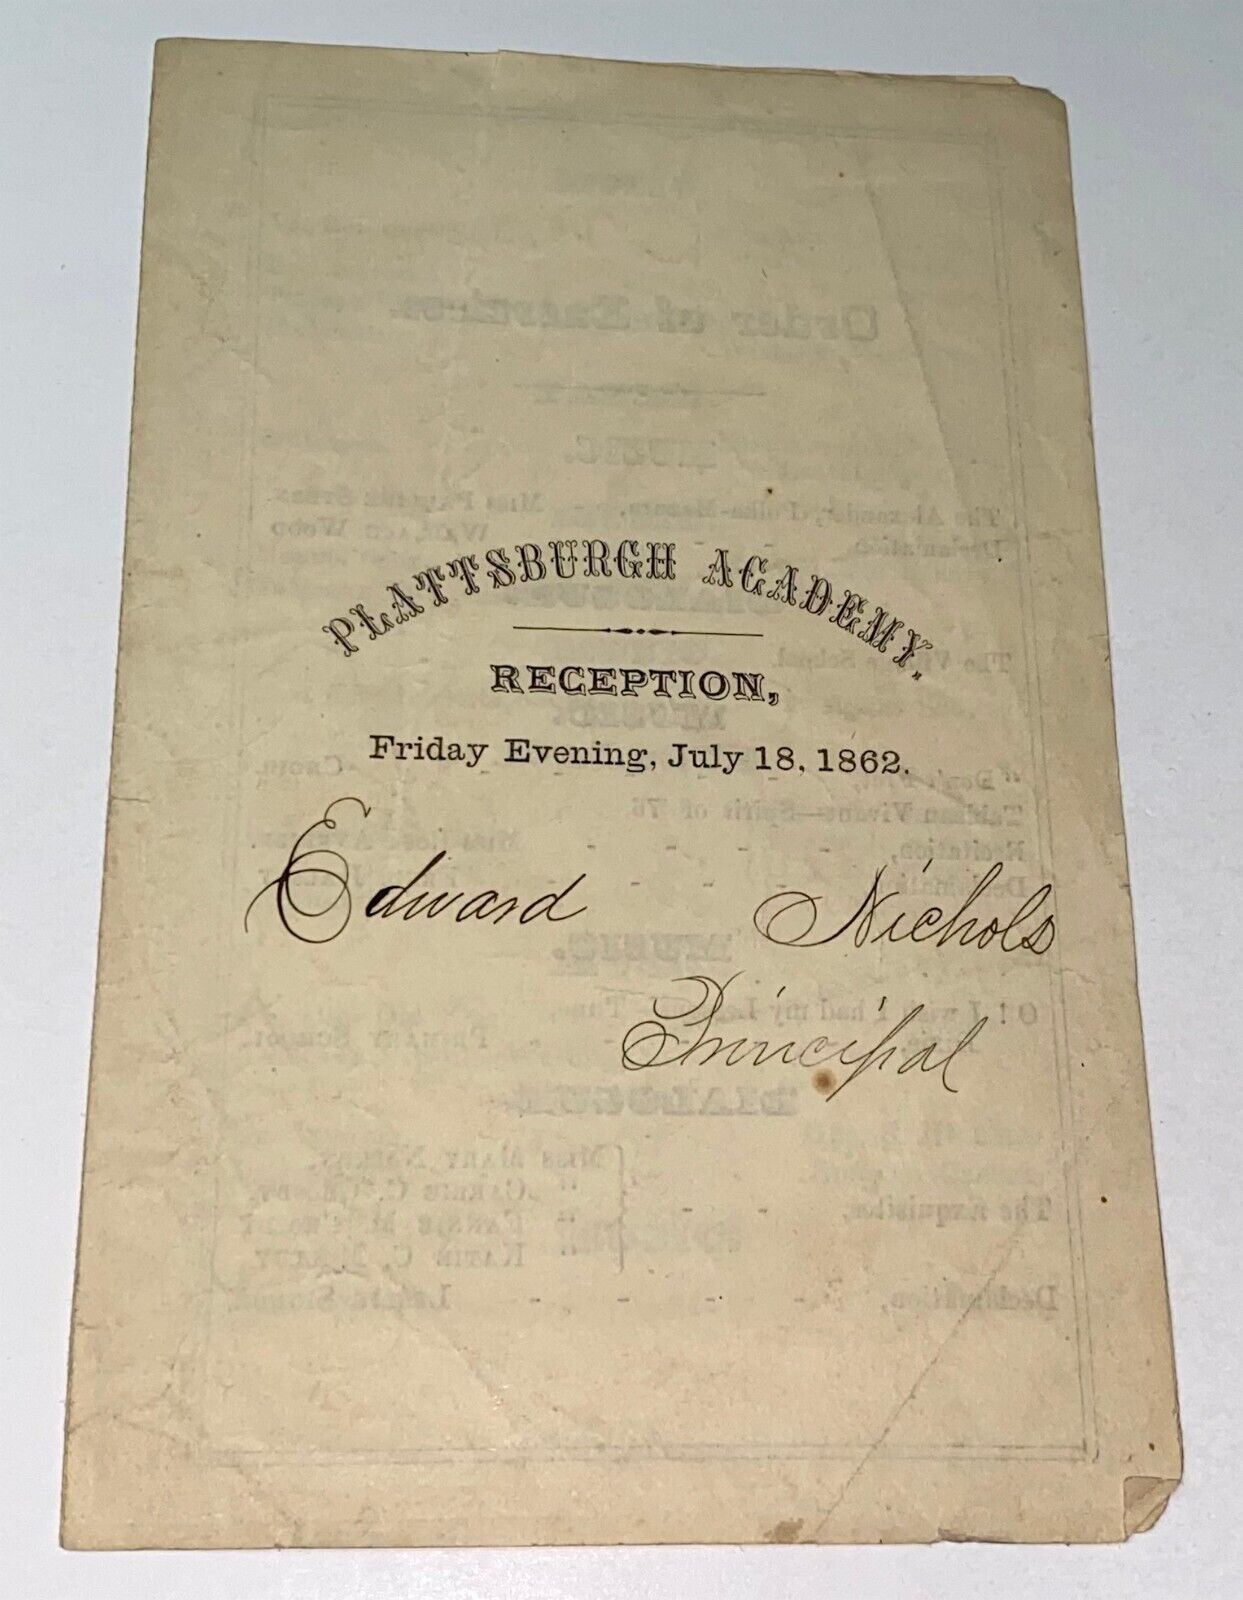 Rare Antique American Civil War Plattsburgh Academy Reception Program 1862 NY